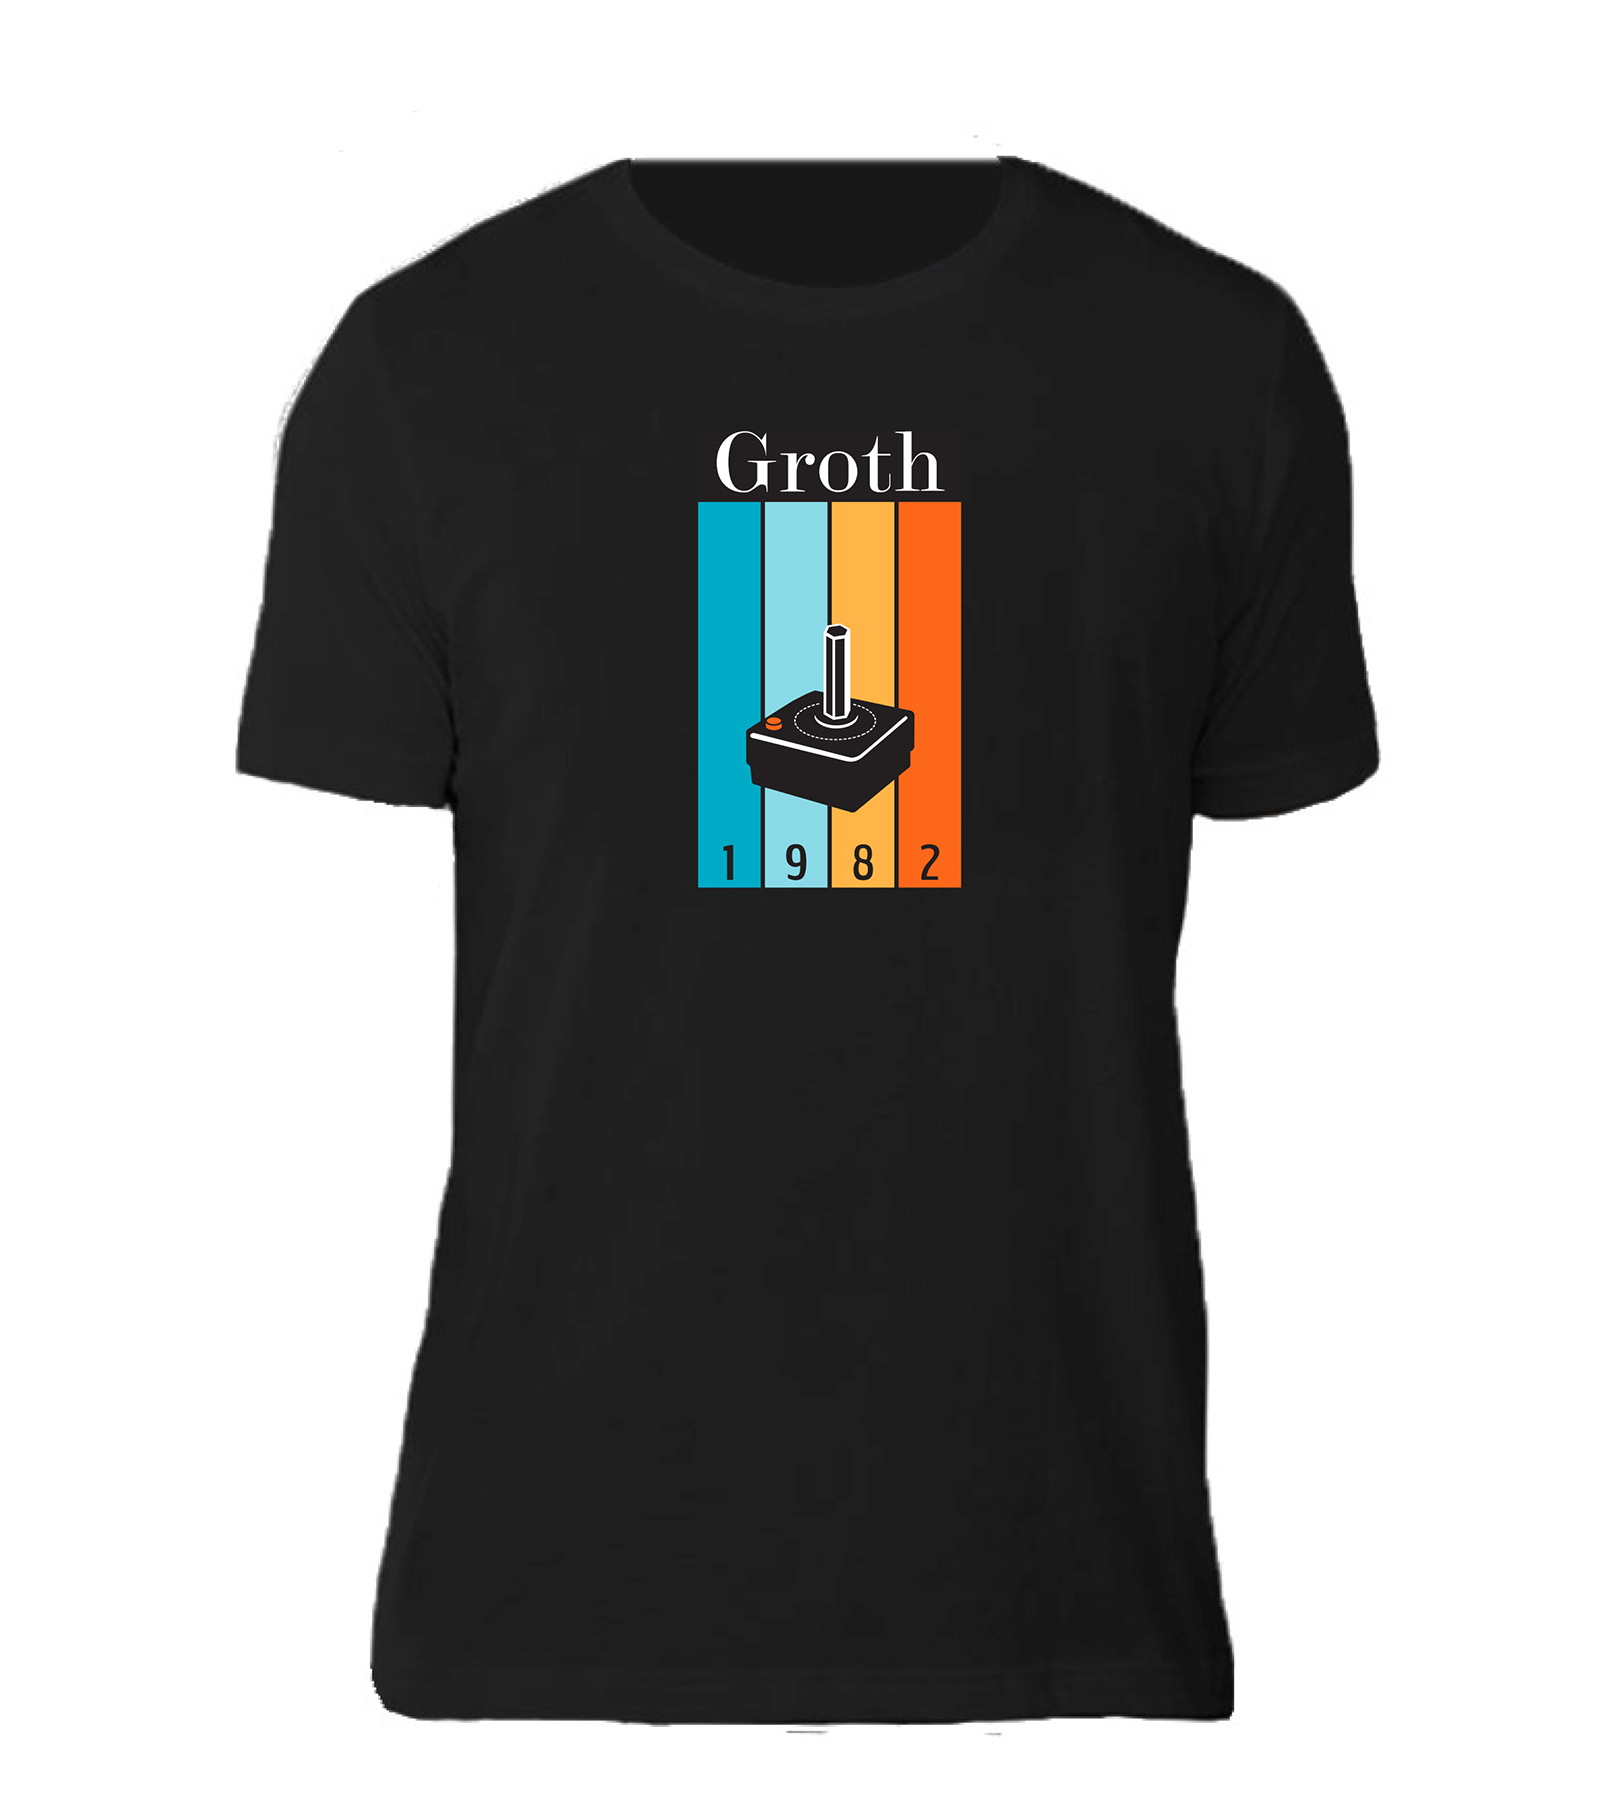 Groth 40th Anniversary T-Shirt